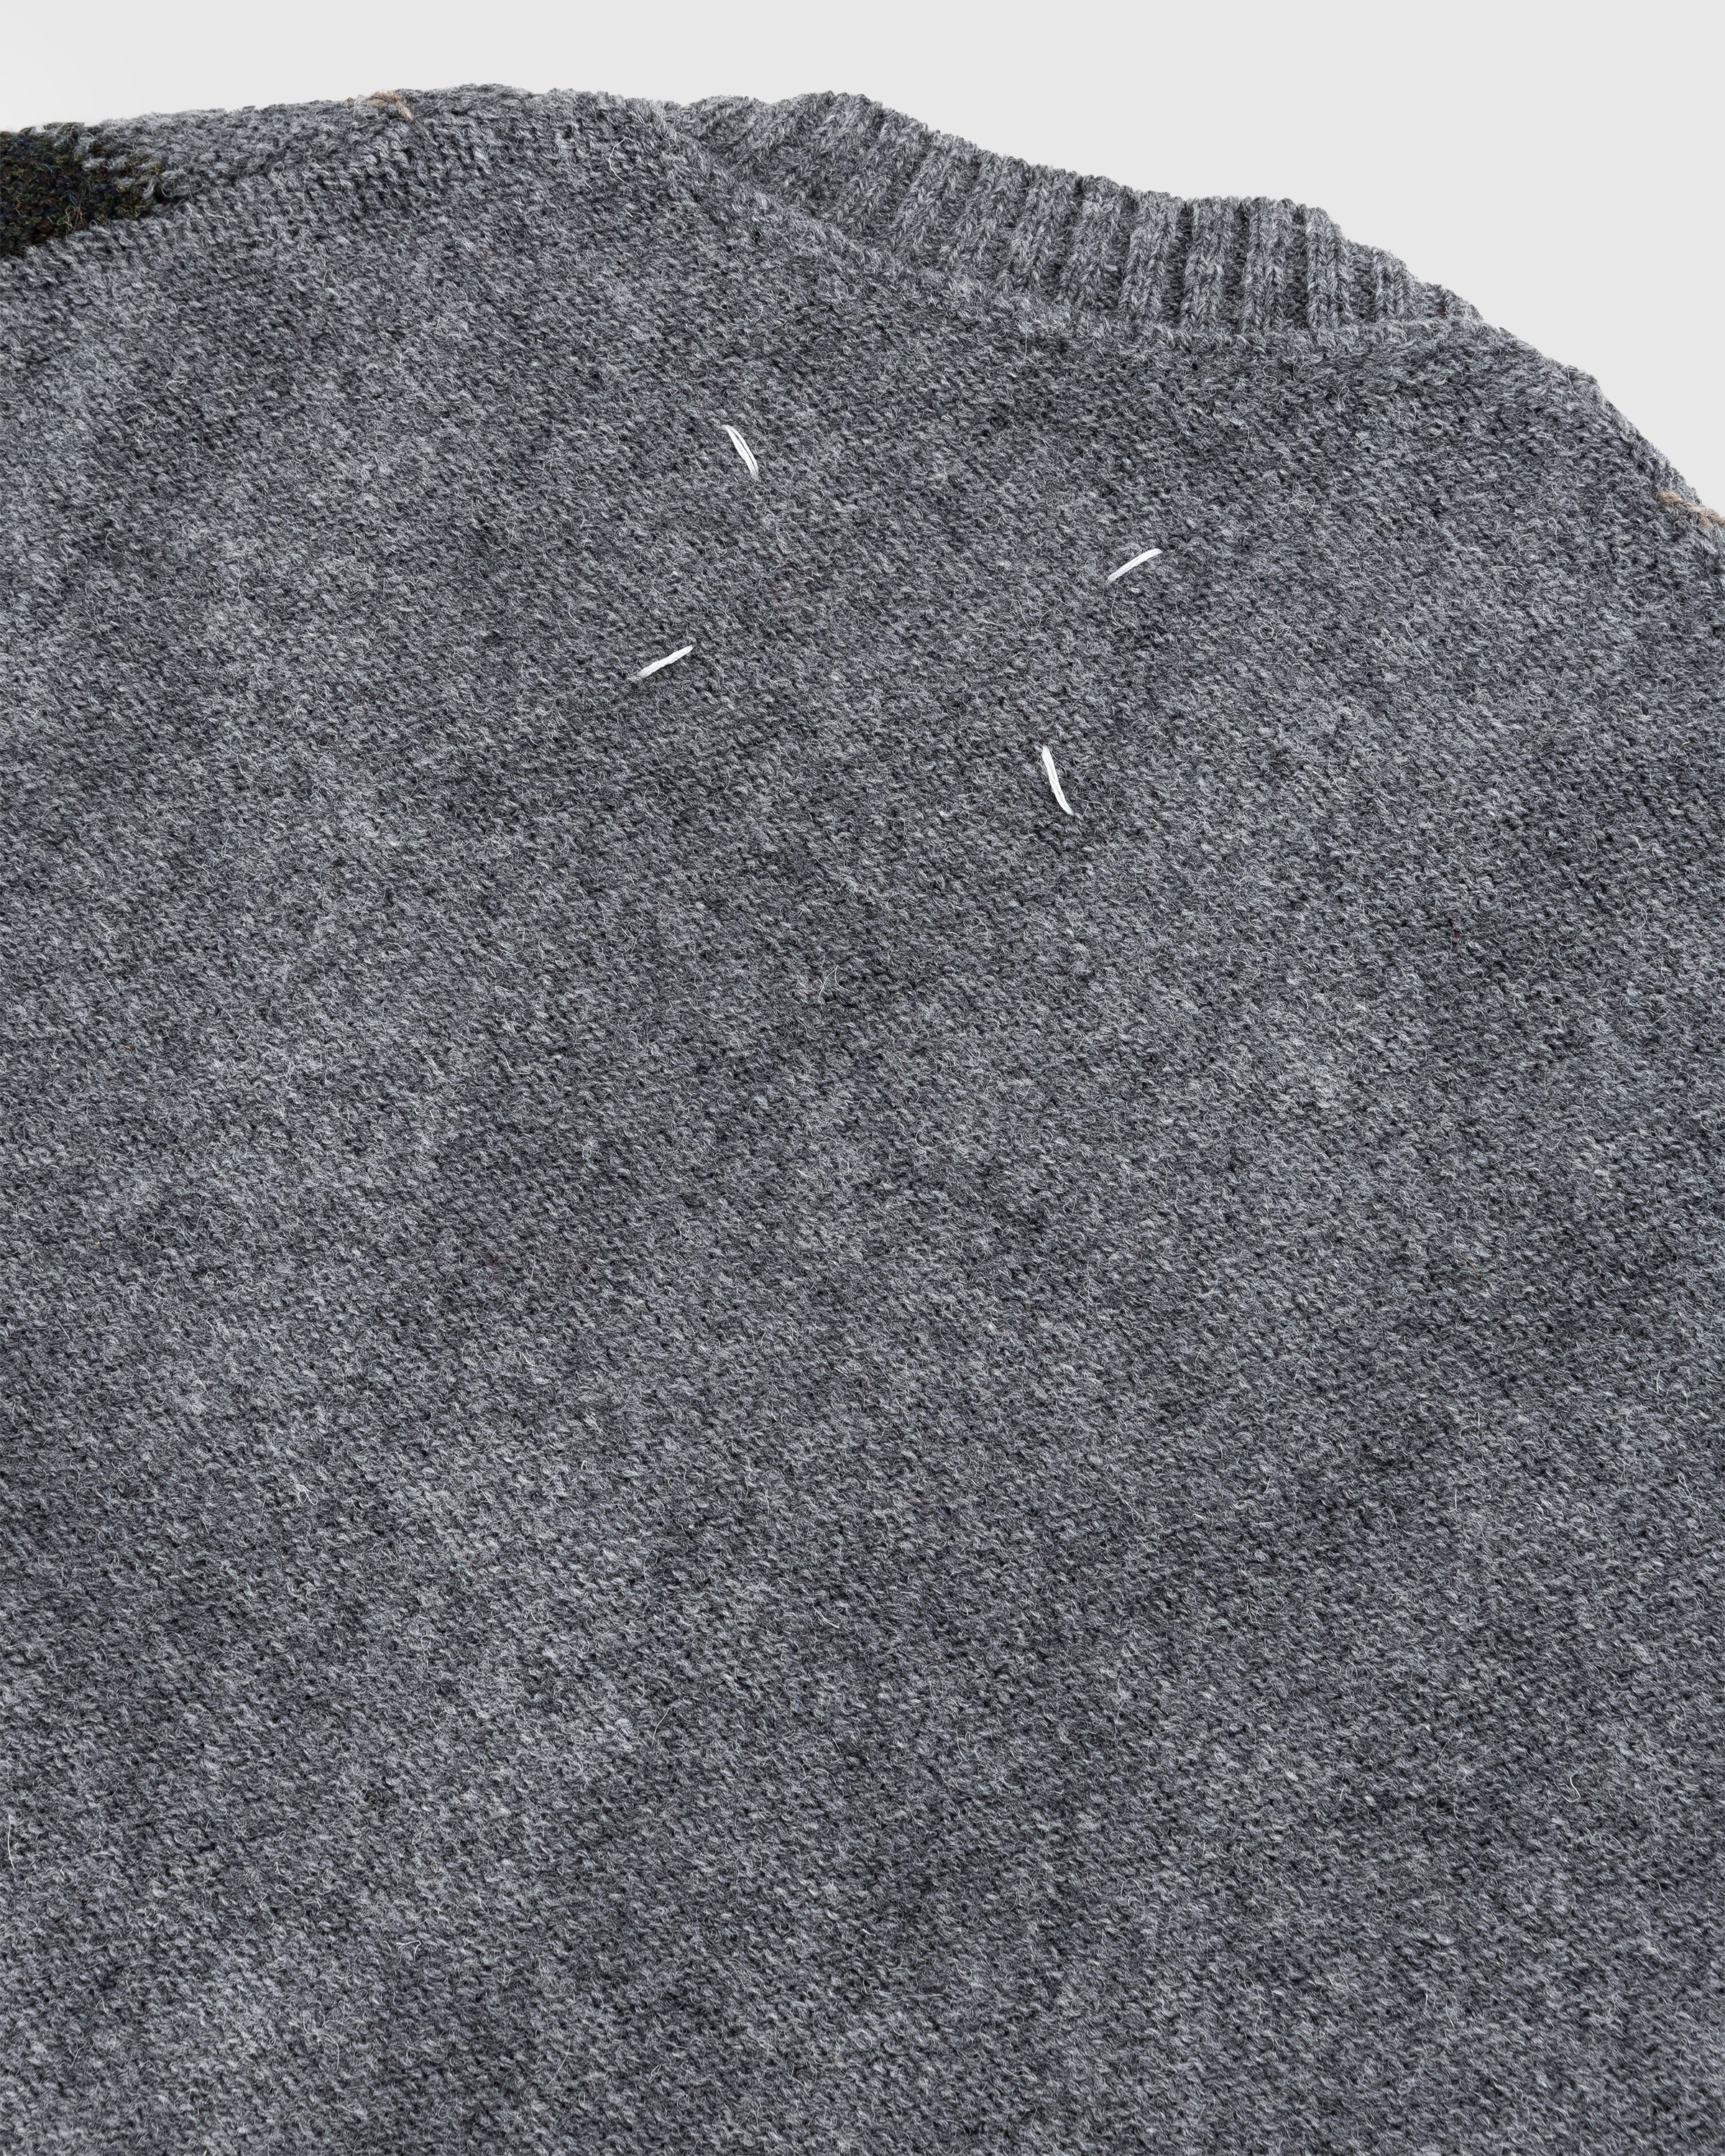 Maison Margiela - Distressed Wool Sweater Vest Multi - Clothing - Multi - Image 6